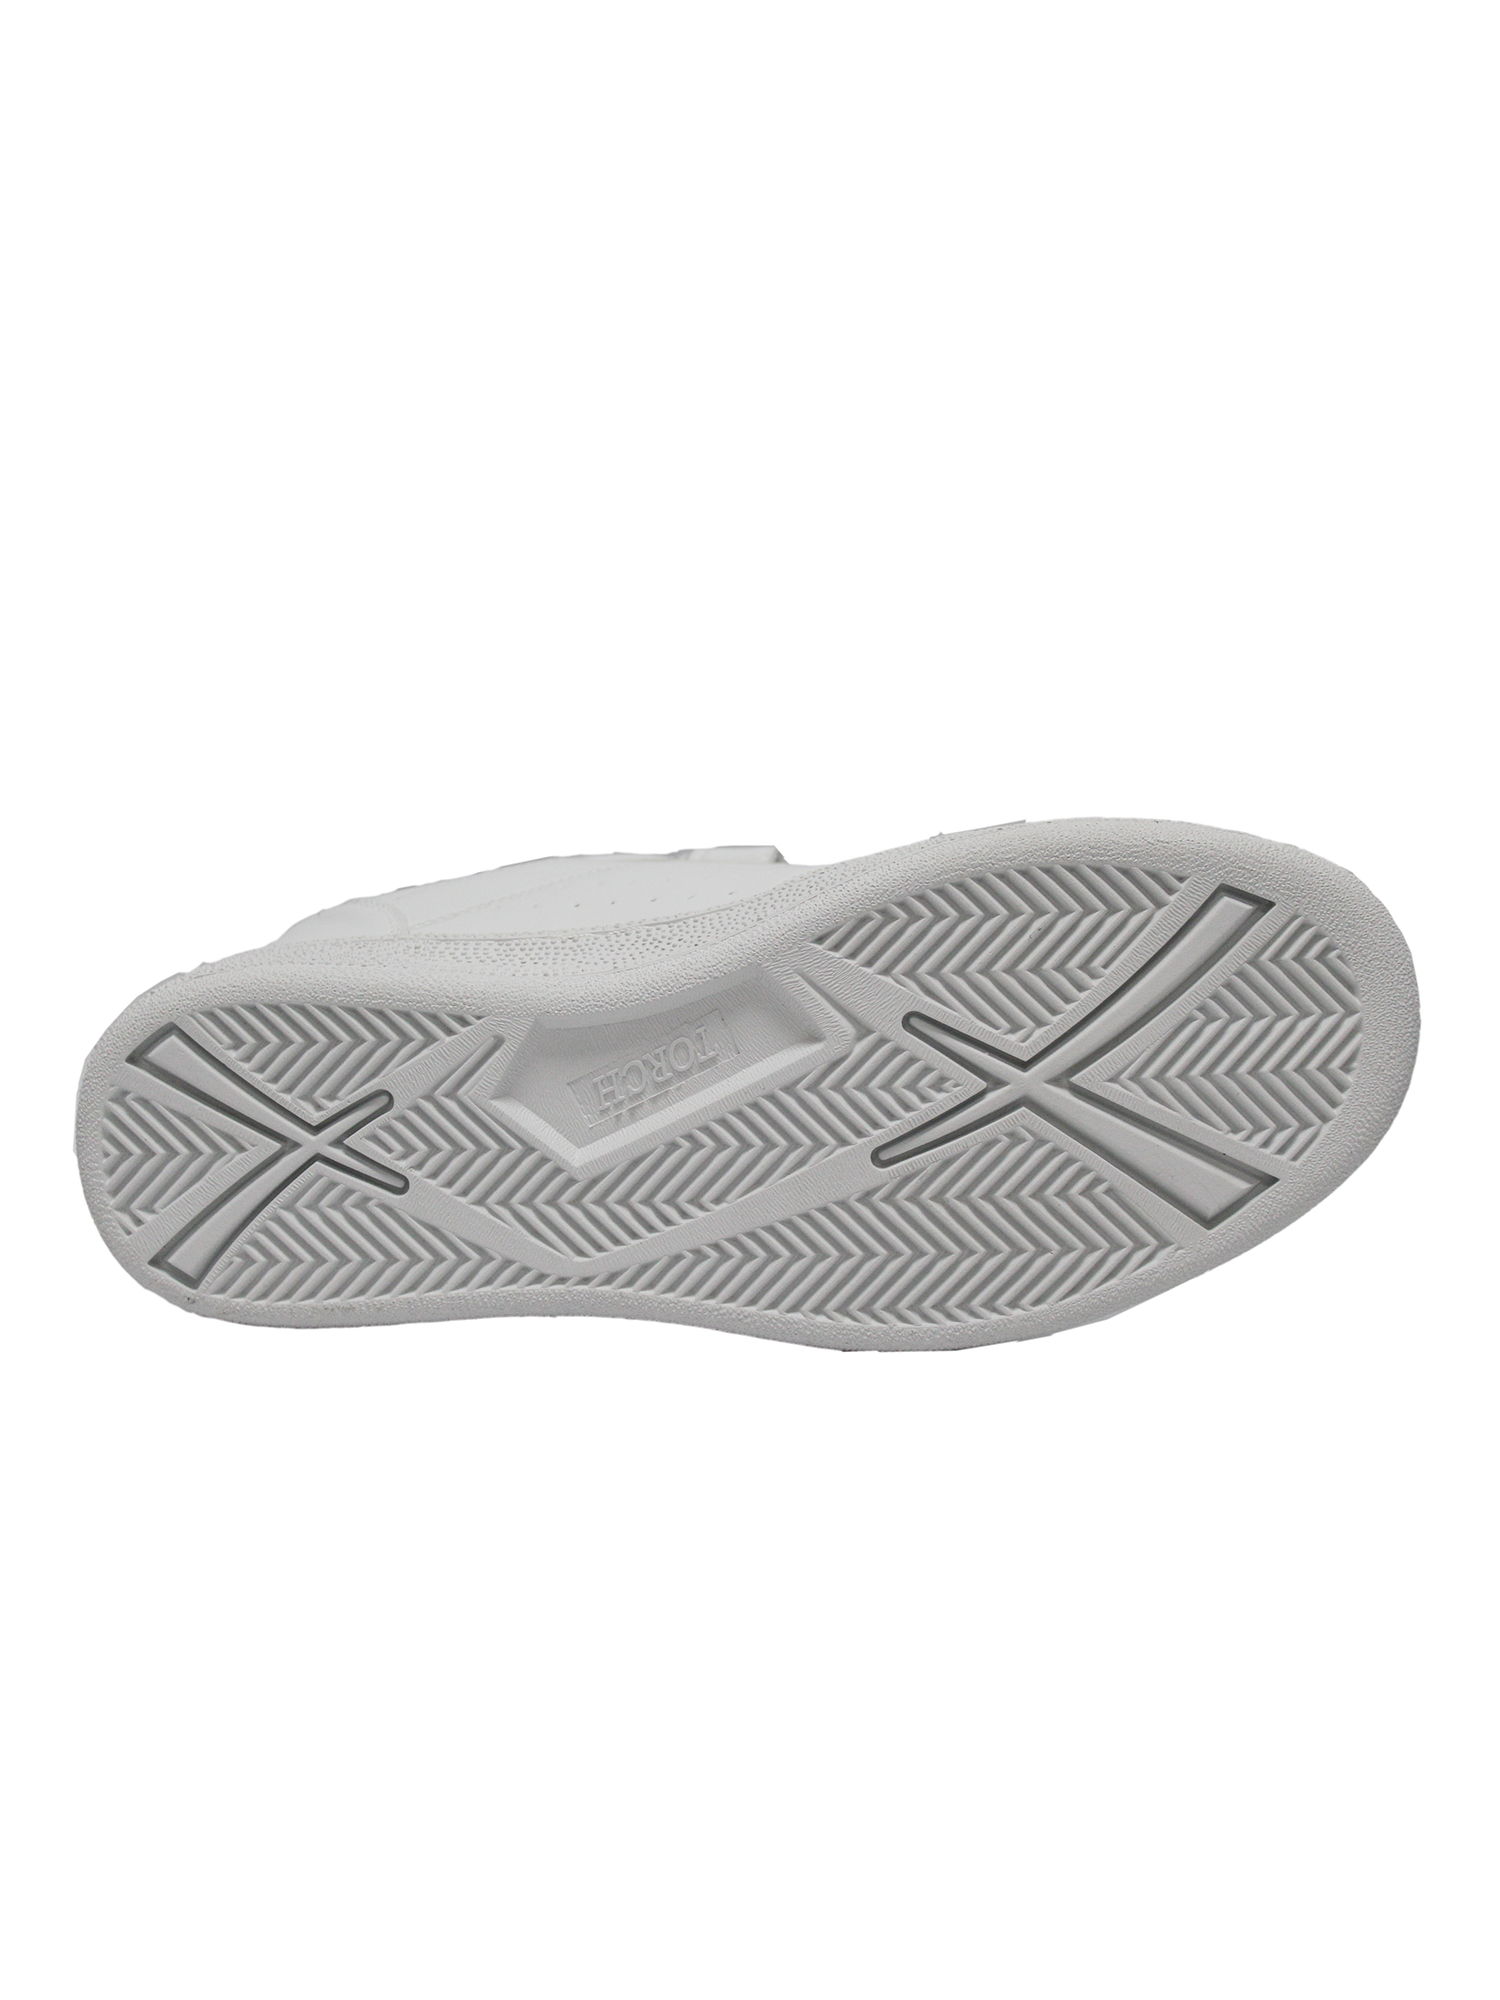 Tanleewa Men's Leather Strap Sneakers Lightweight Hook and Loop Walking Shoe Size 3.5 Adult Male - image 4 of 5